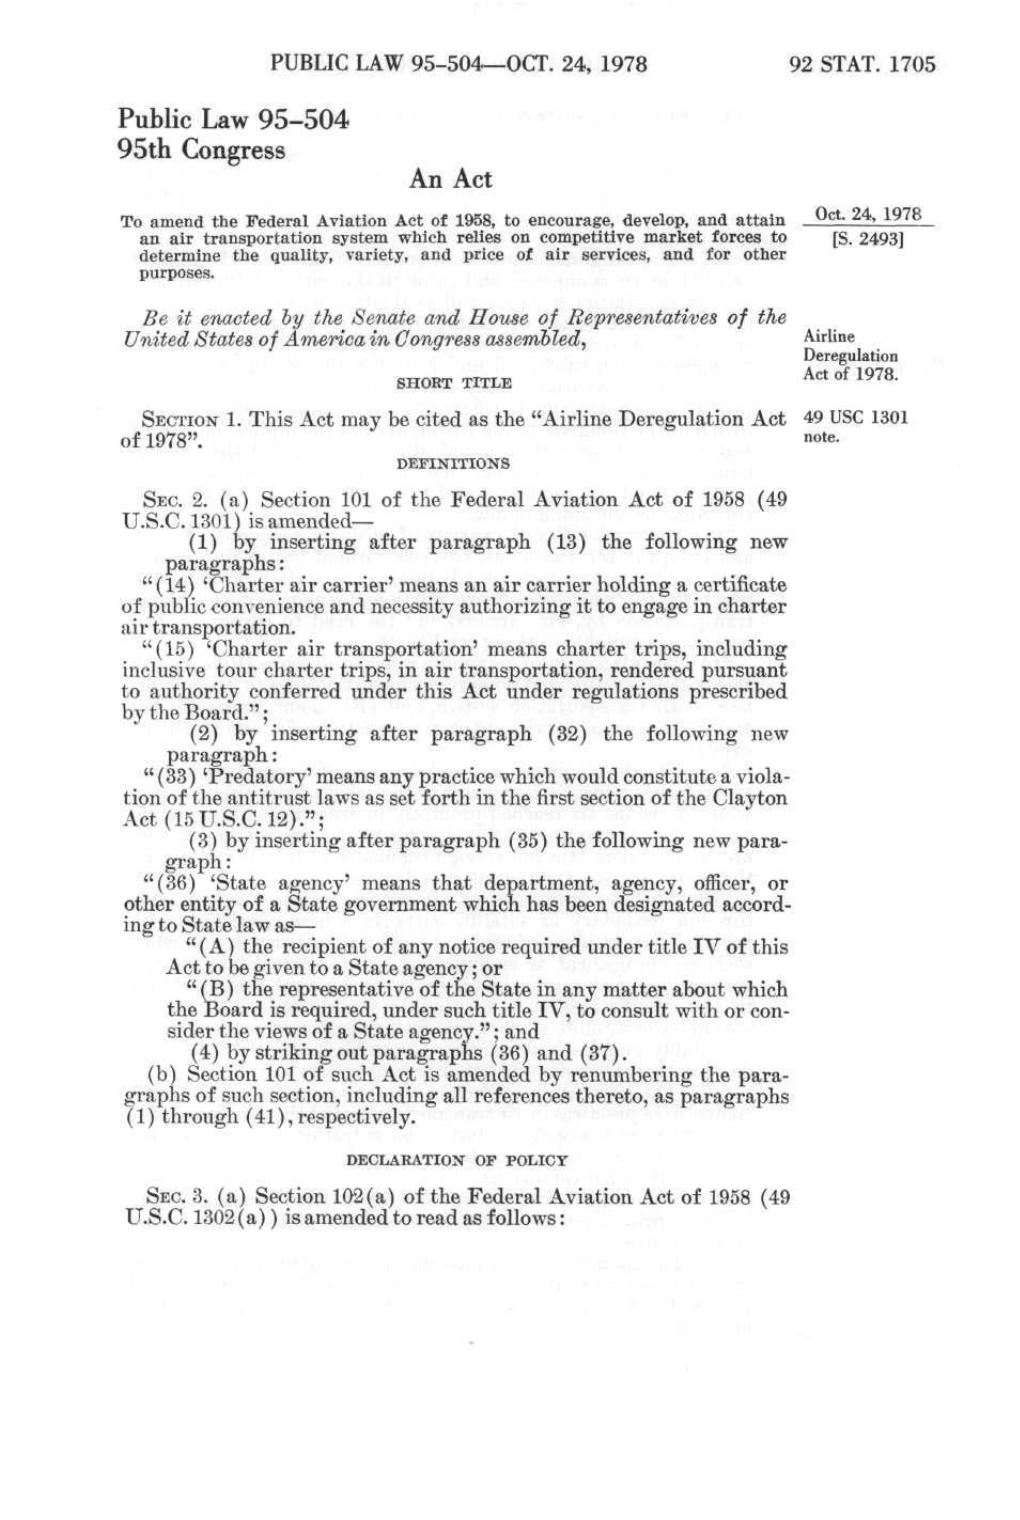 Airline Deregulation Act of 1978